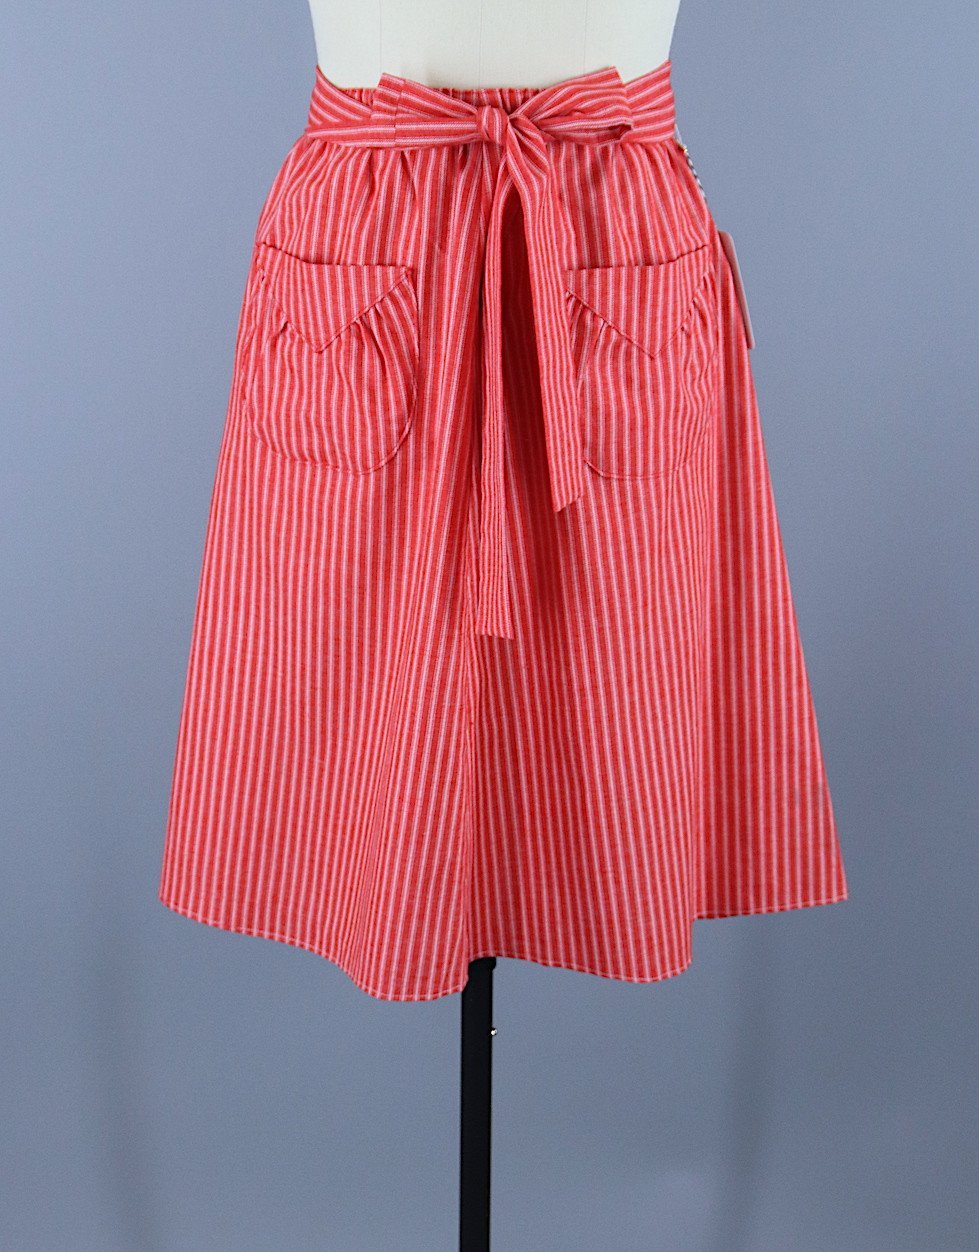 Vintage 1970s Skirt / Red & White Pinstripe Cotton Ticking - ThisBlueBird